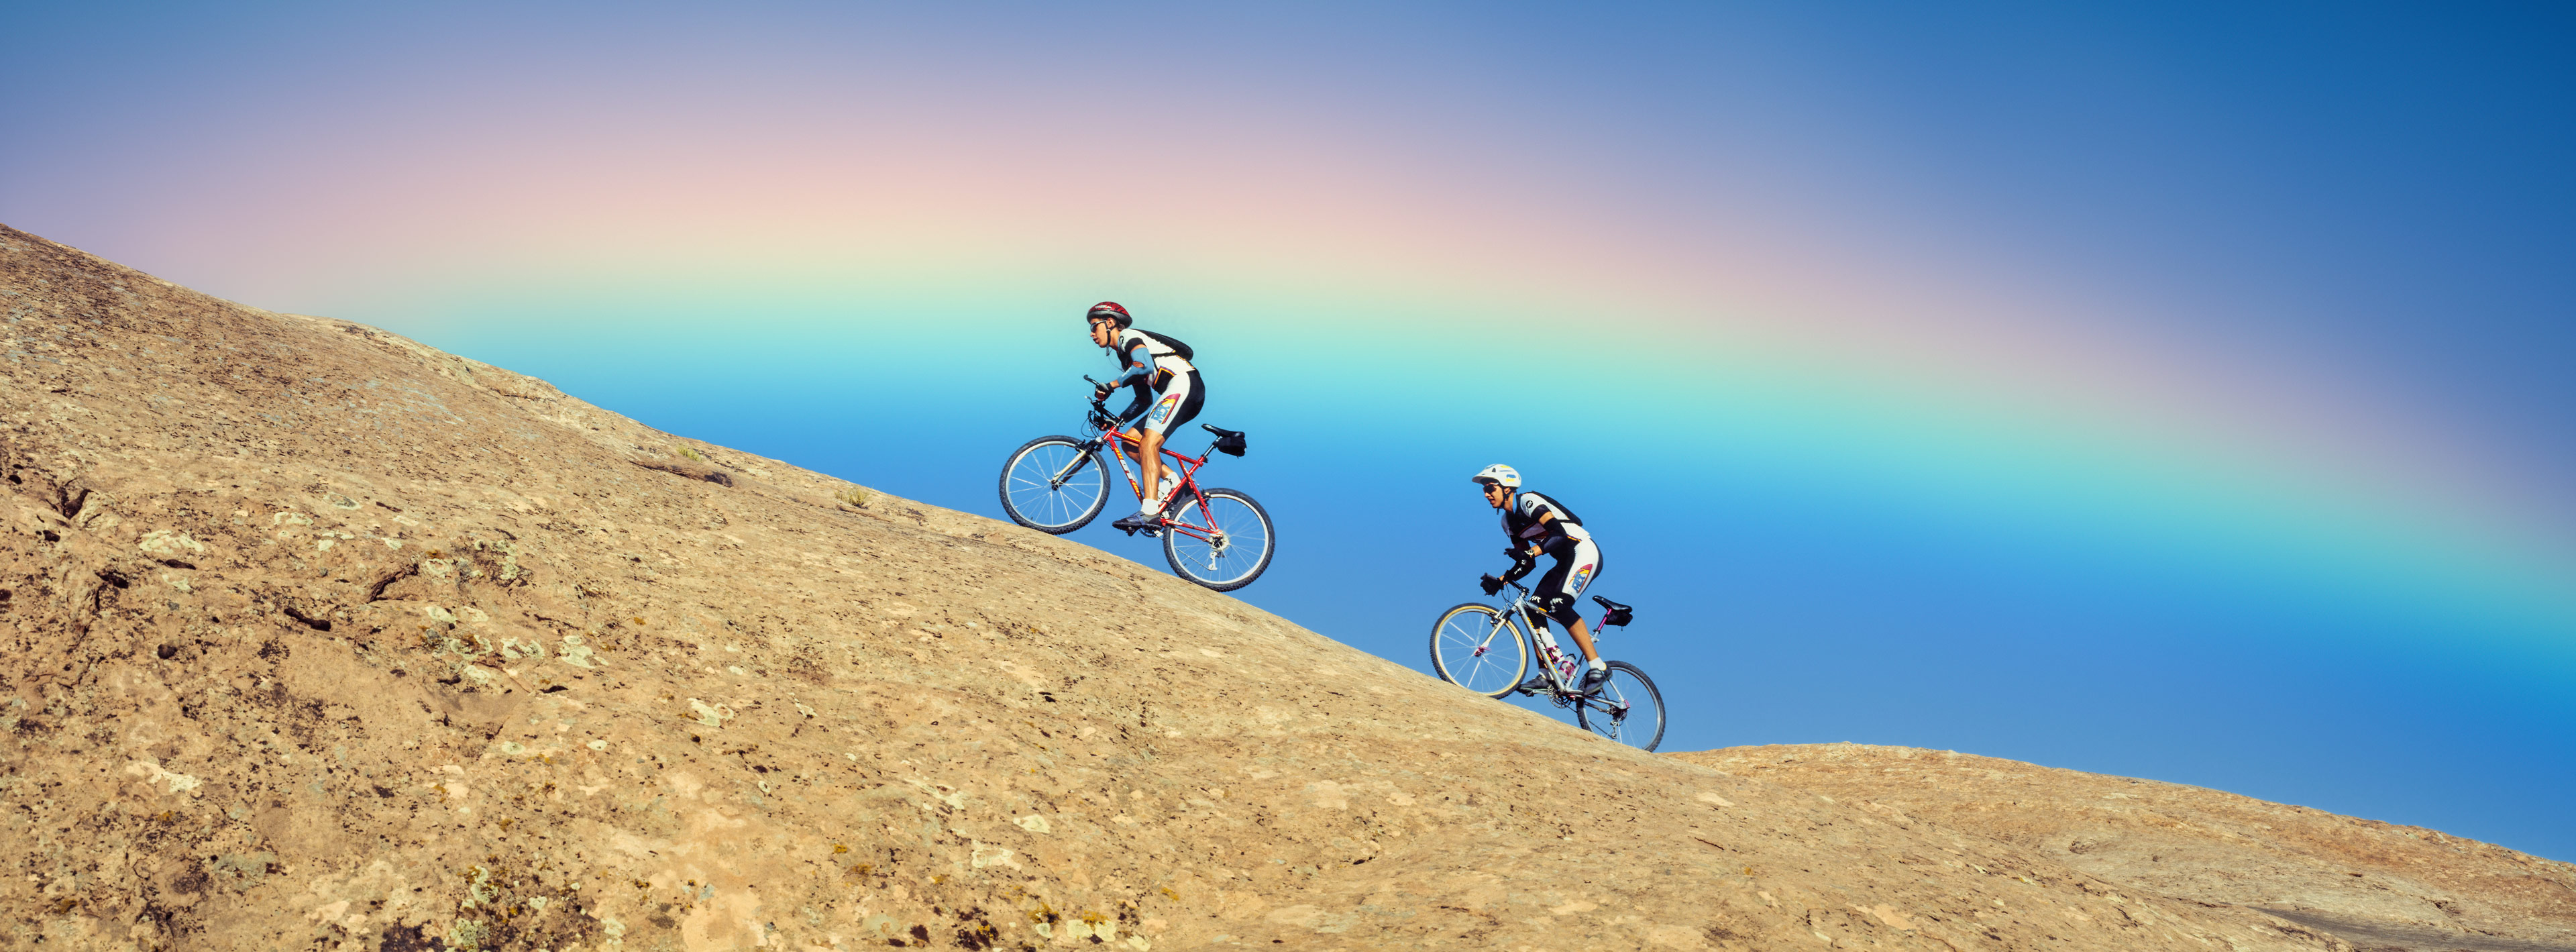 Mountain Bikers, Moab Bike Trail, Moab, Utah, USA